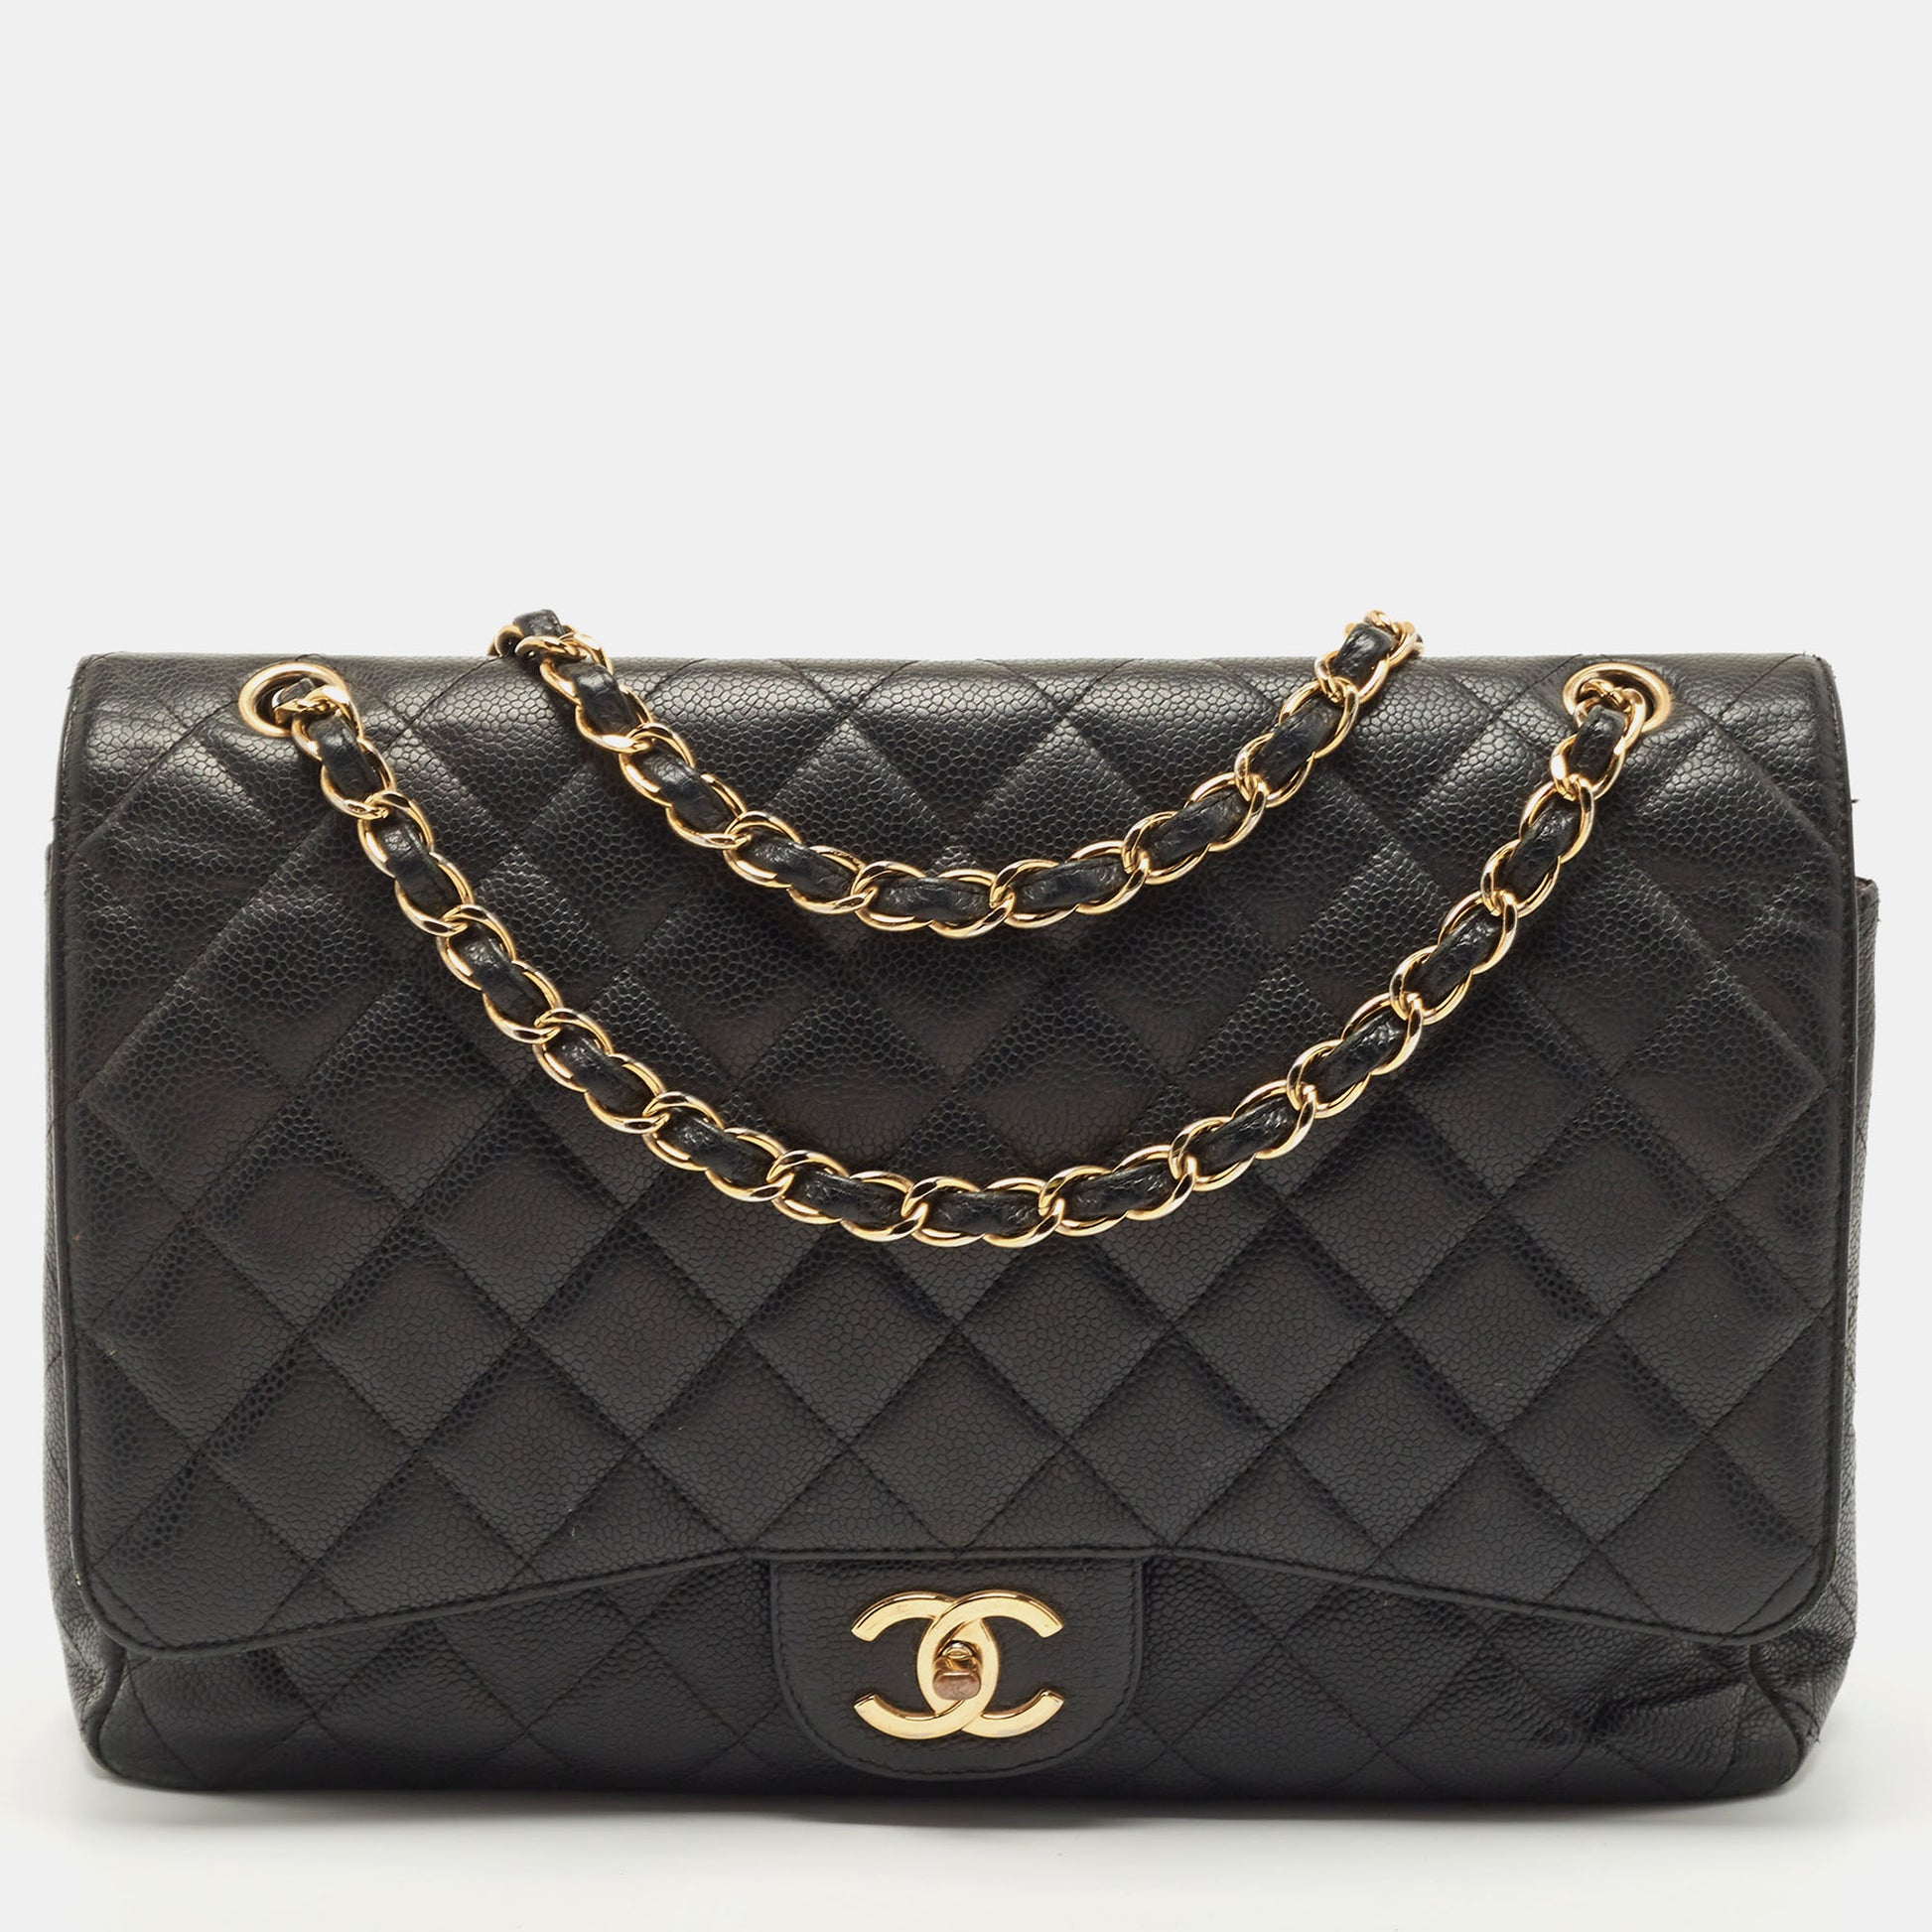 Chanel Maxi Classic Double Flap Bag Dark Pink Caviar Light Gold